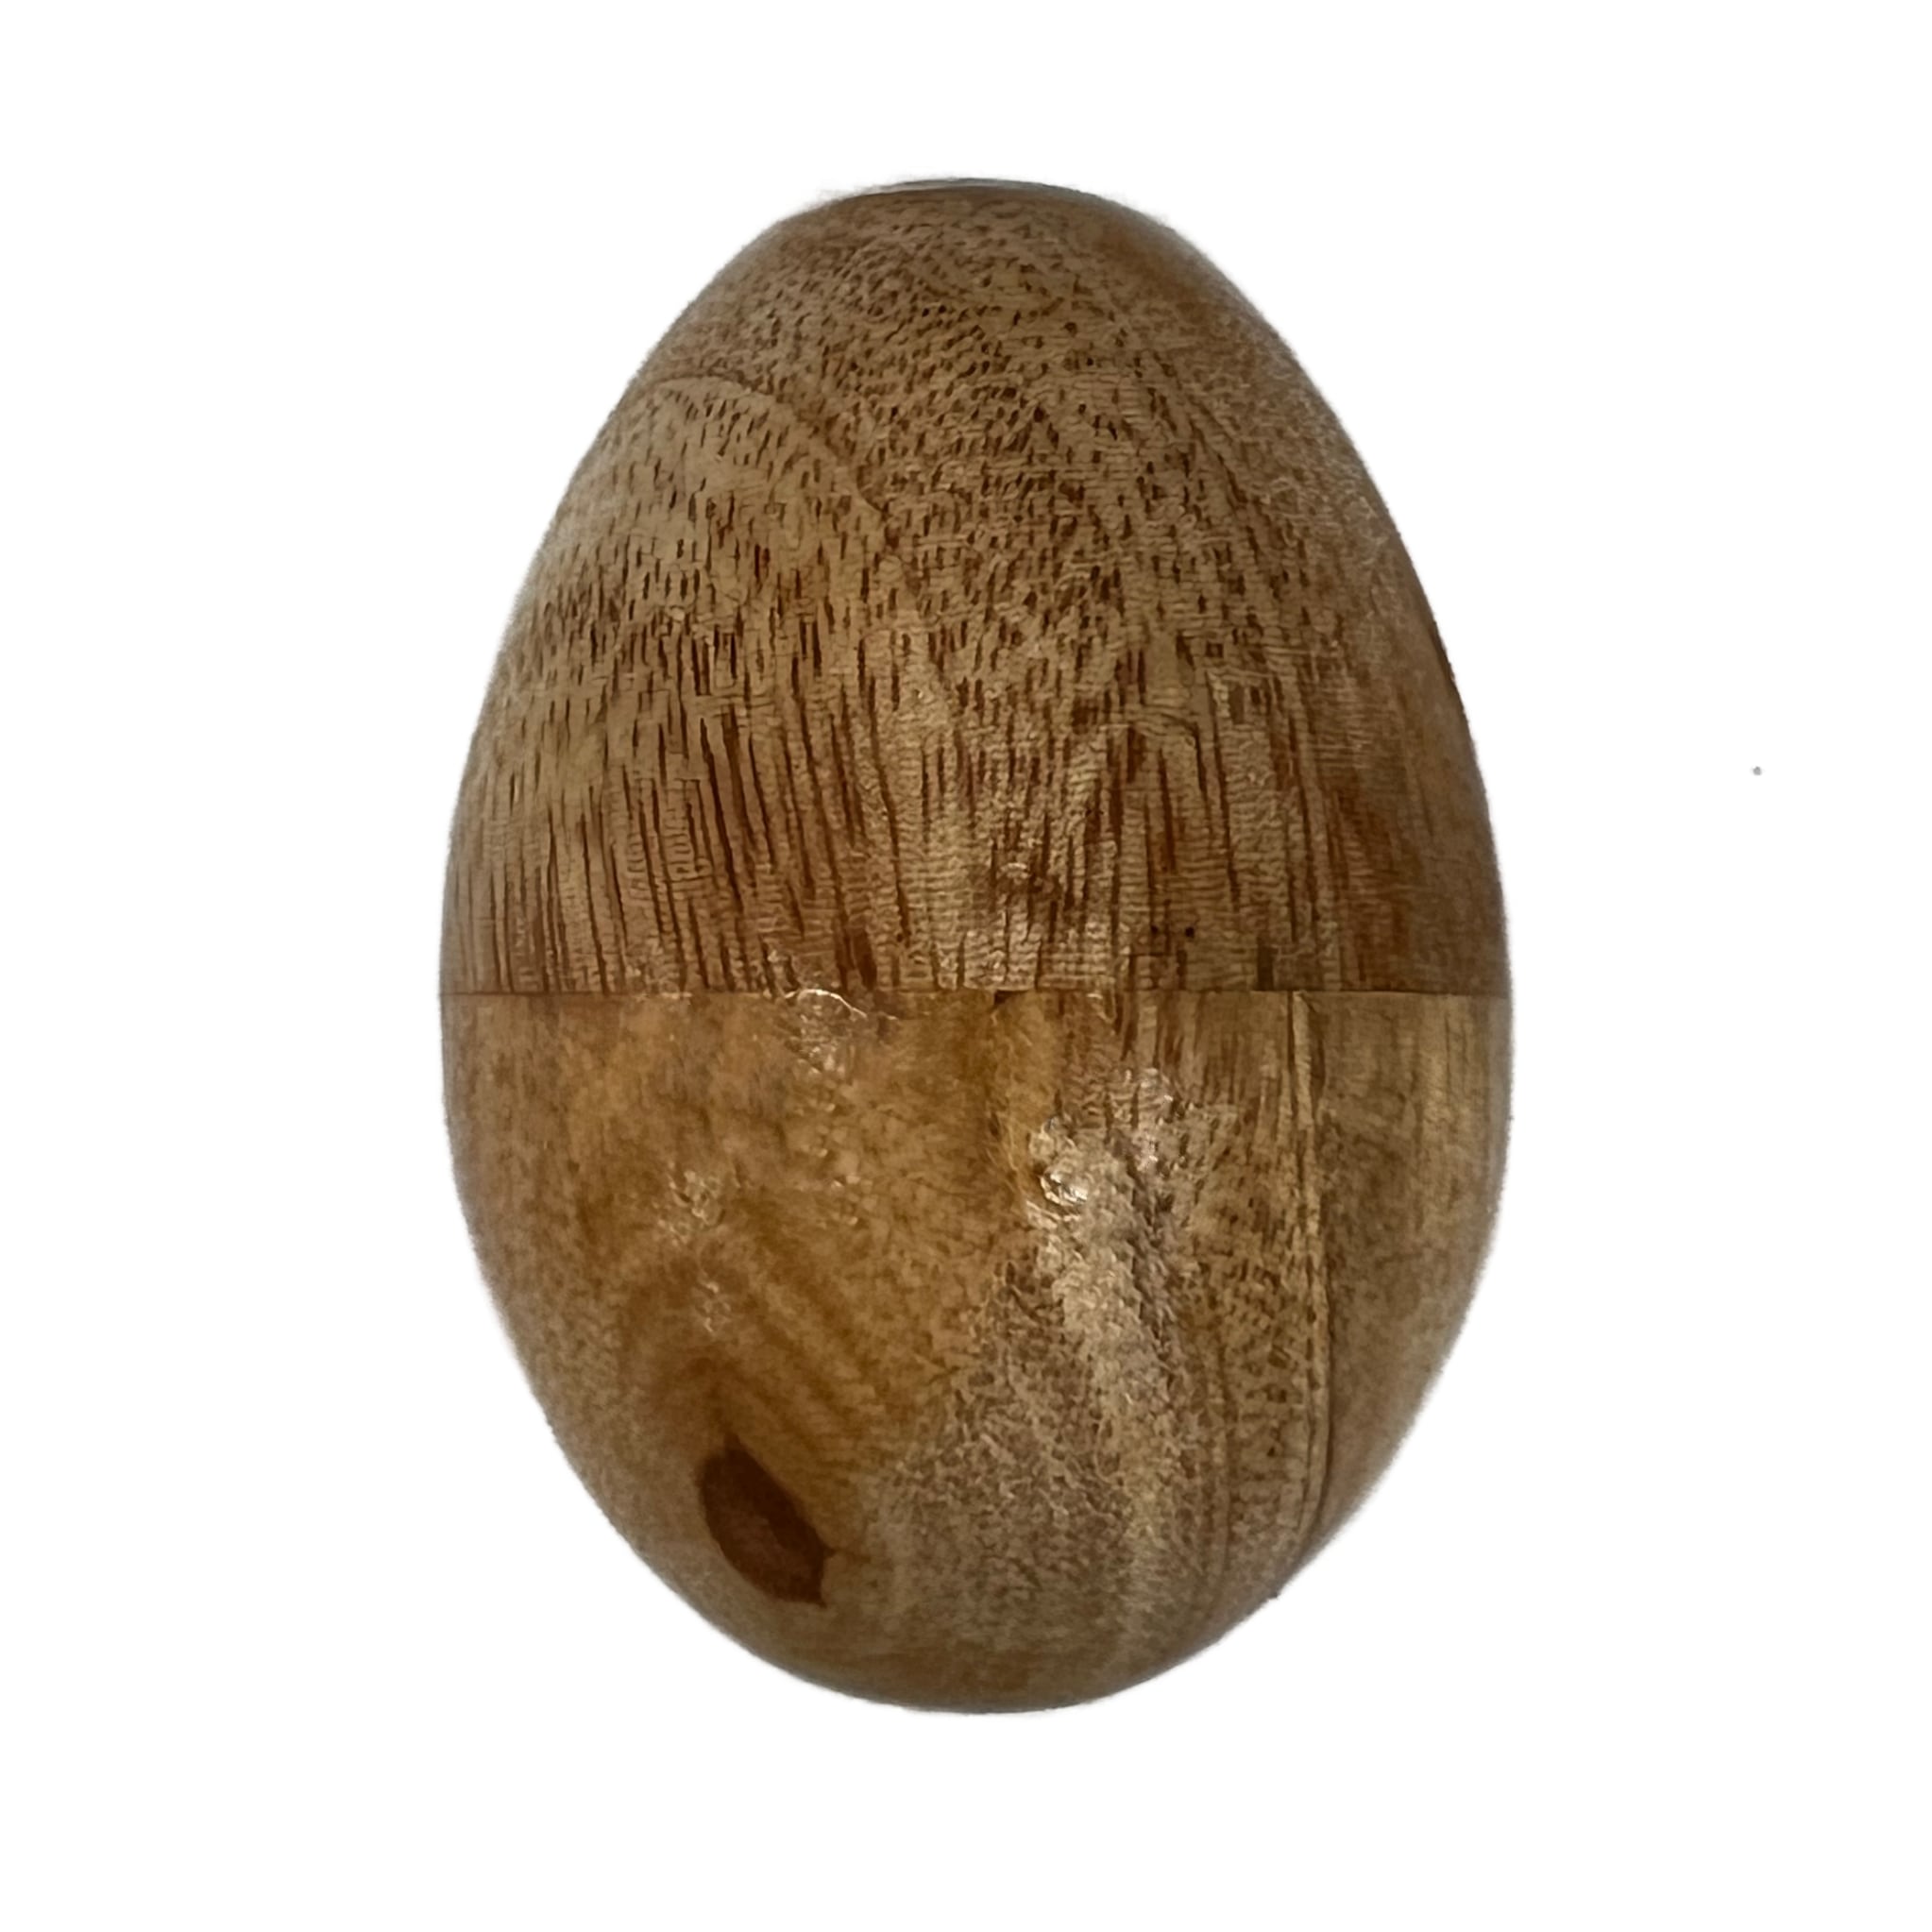 Small egg sized wood egg rattle 